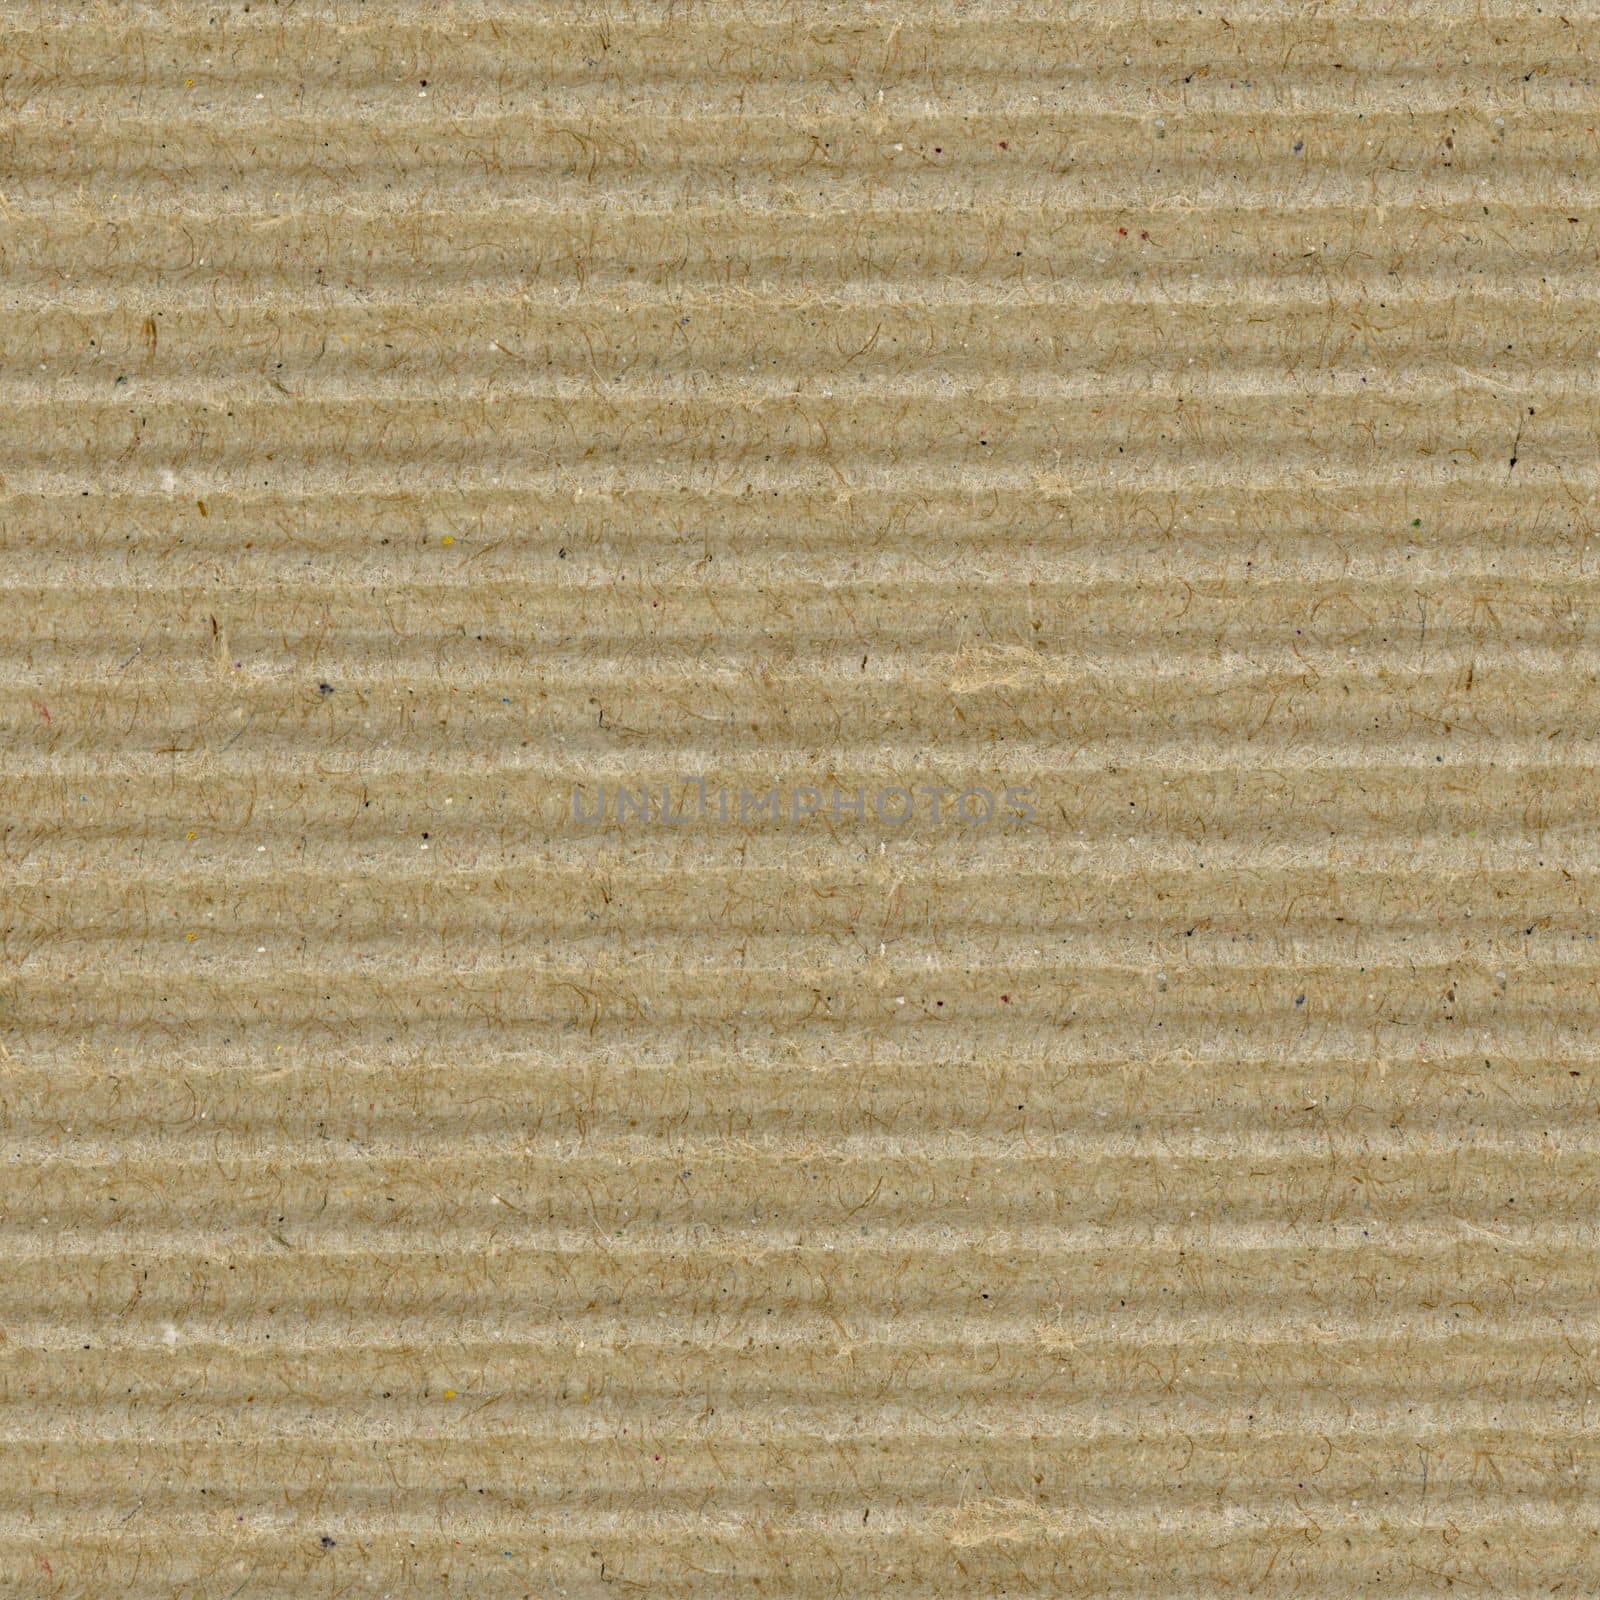 grunge brown corrugated cardboard texture background by claudiodivizia